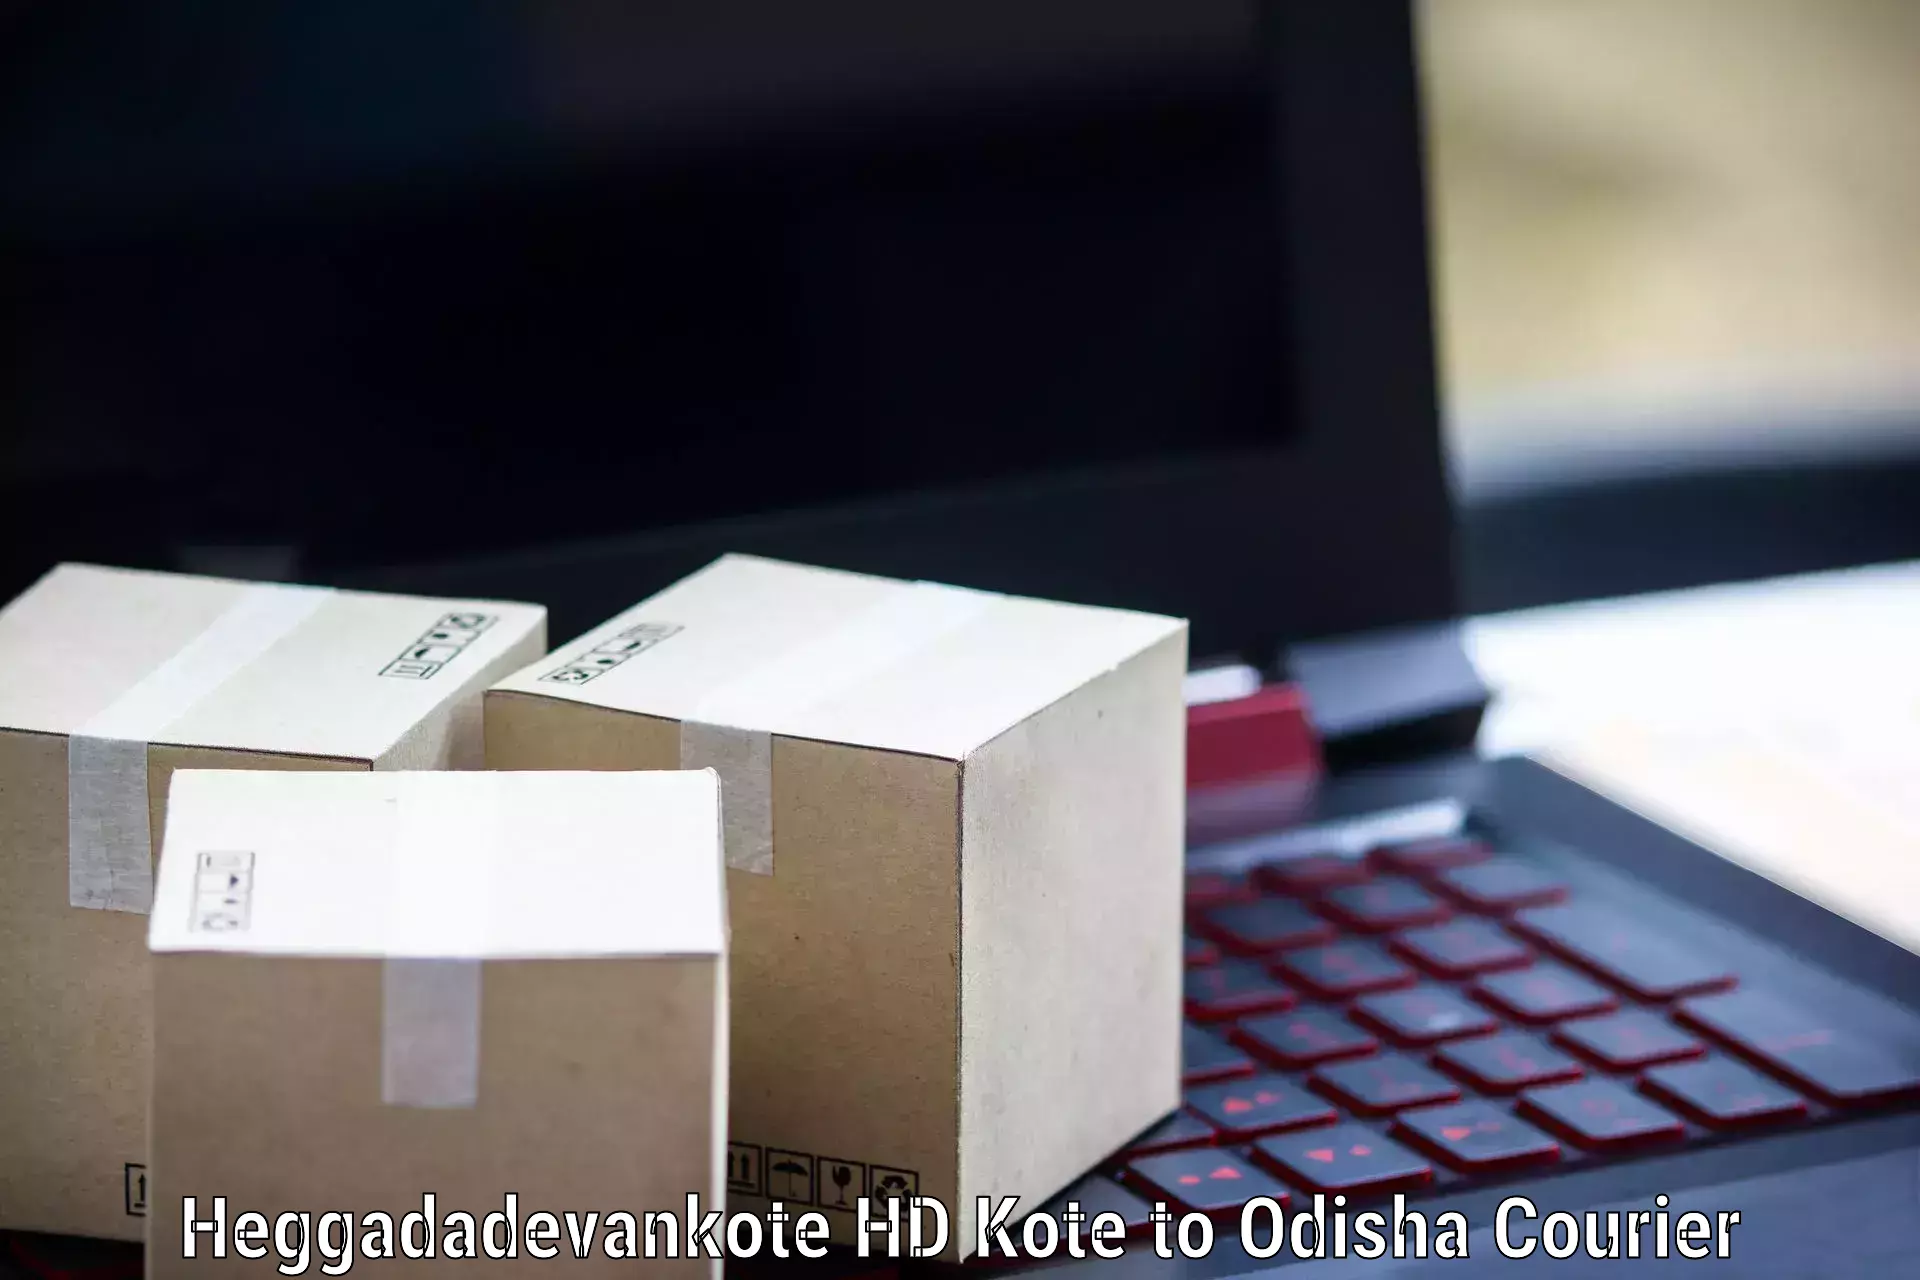 Smart shipping technology Heggadadevankote HD Kote to Ukhunda